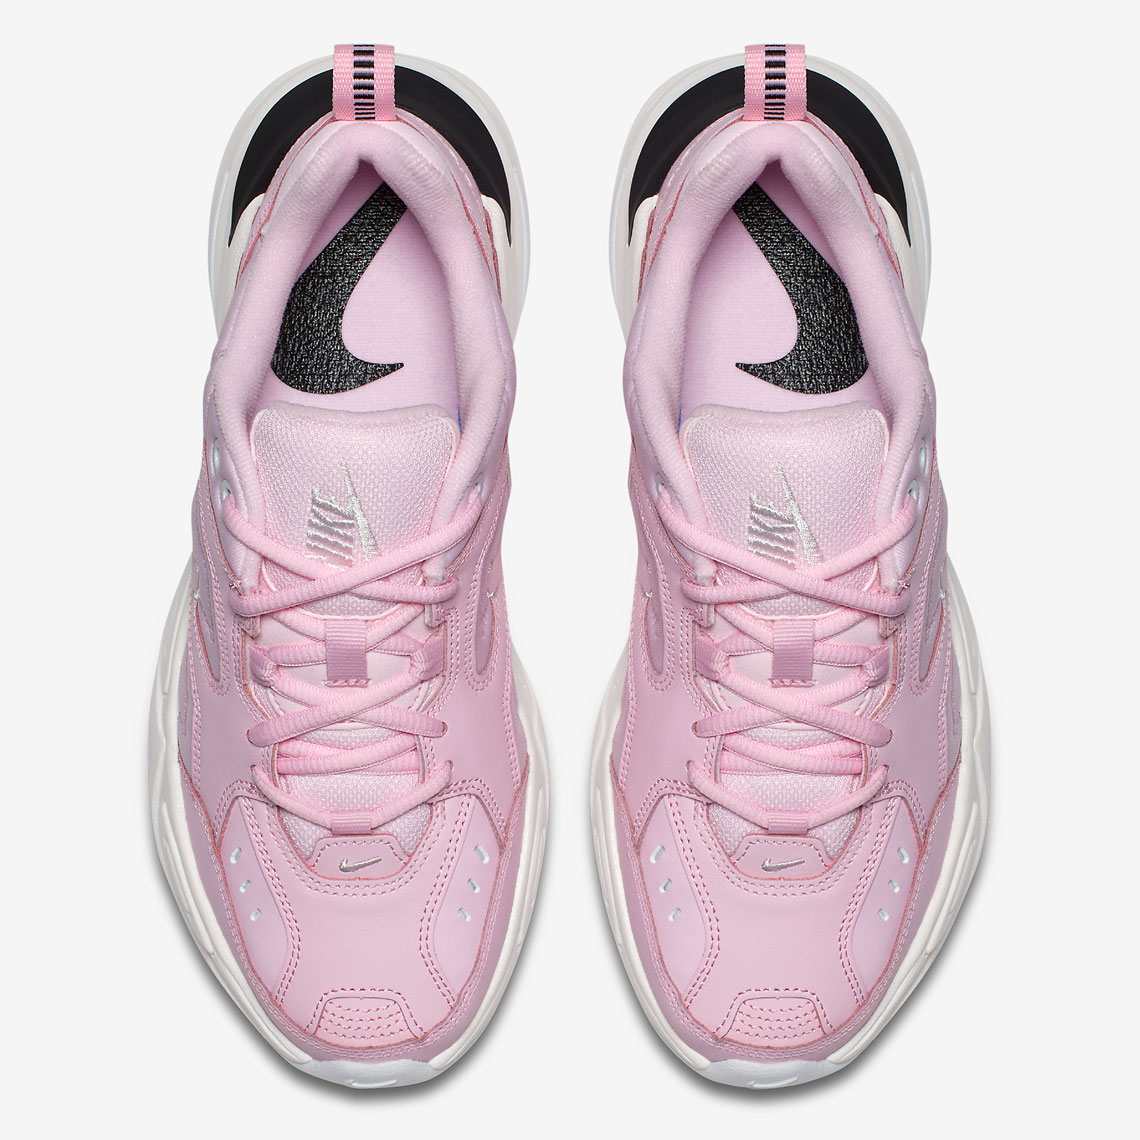 Nike M2k Tekno Pink Release Info Sneakernews Com